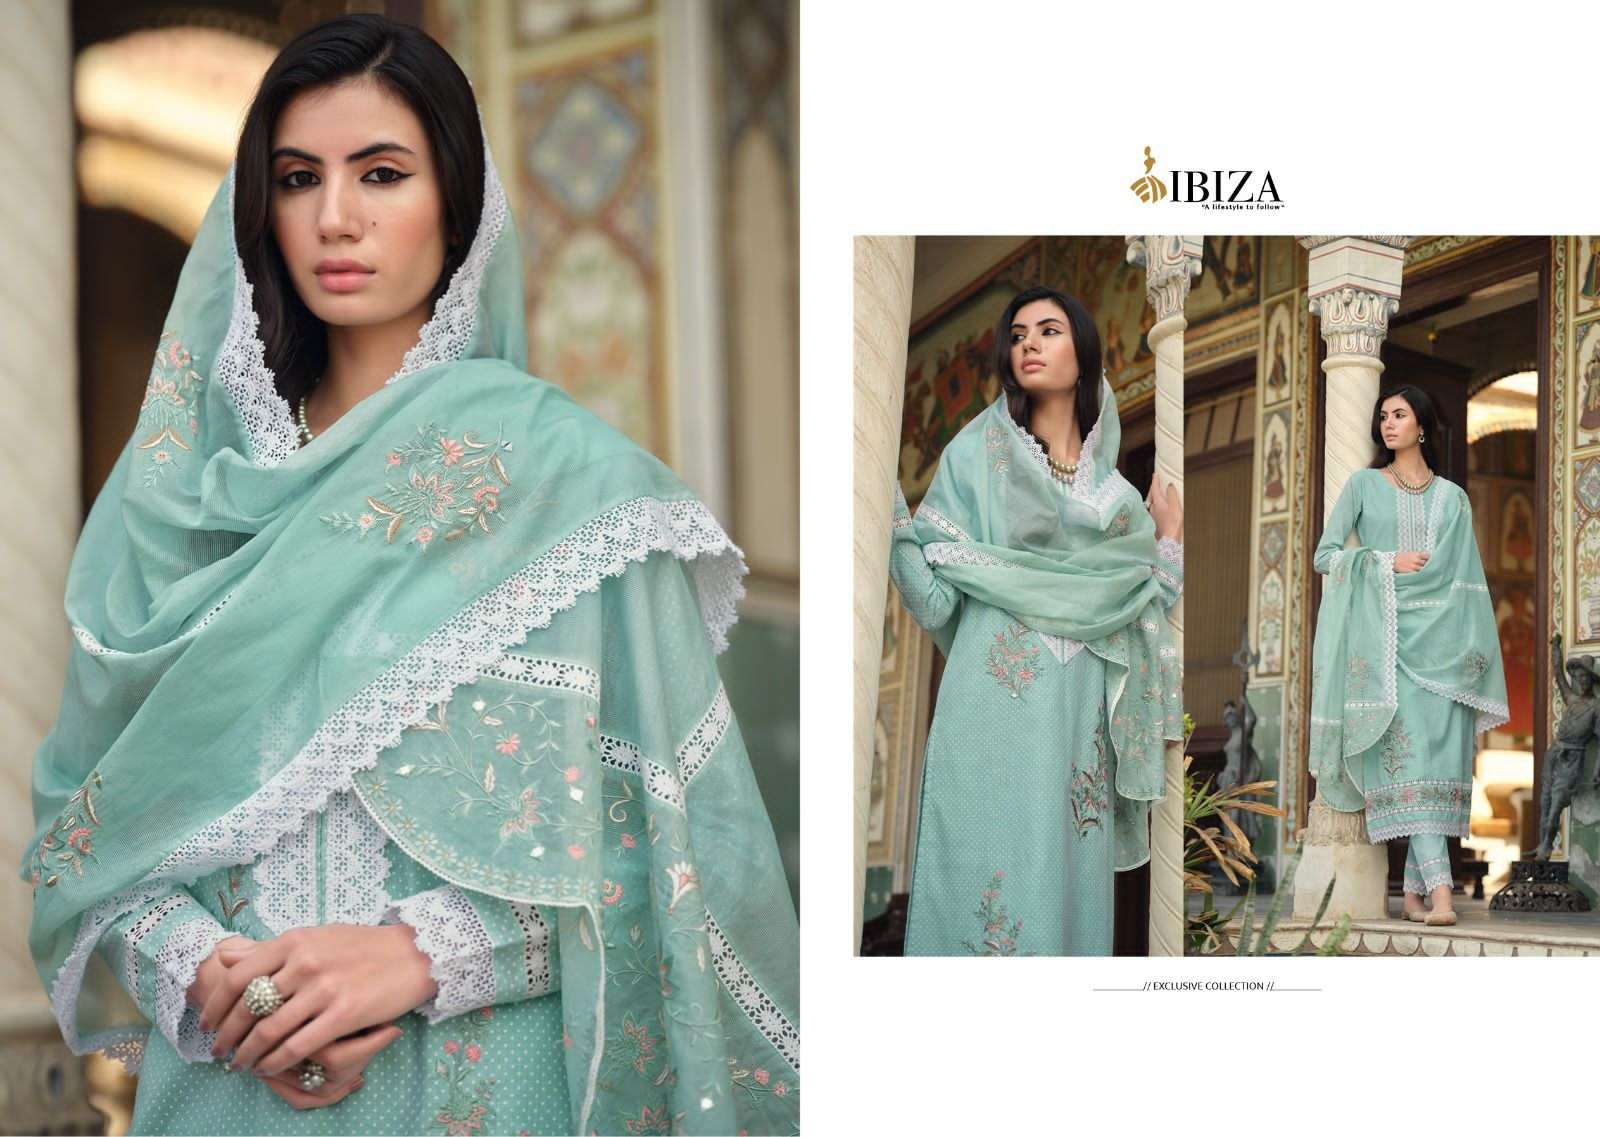 ibiza raysa 10347 series stylish designer salwar kameez catalogue wholesaler surat